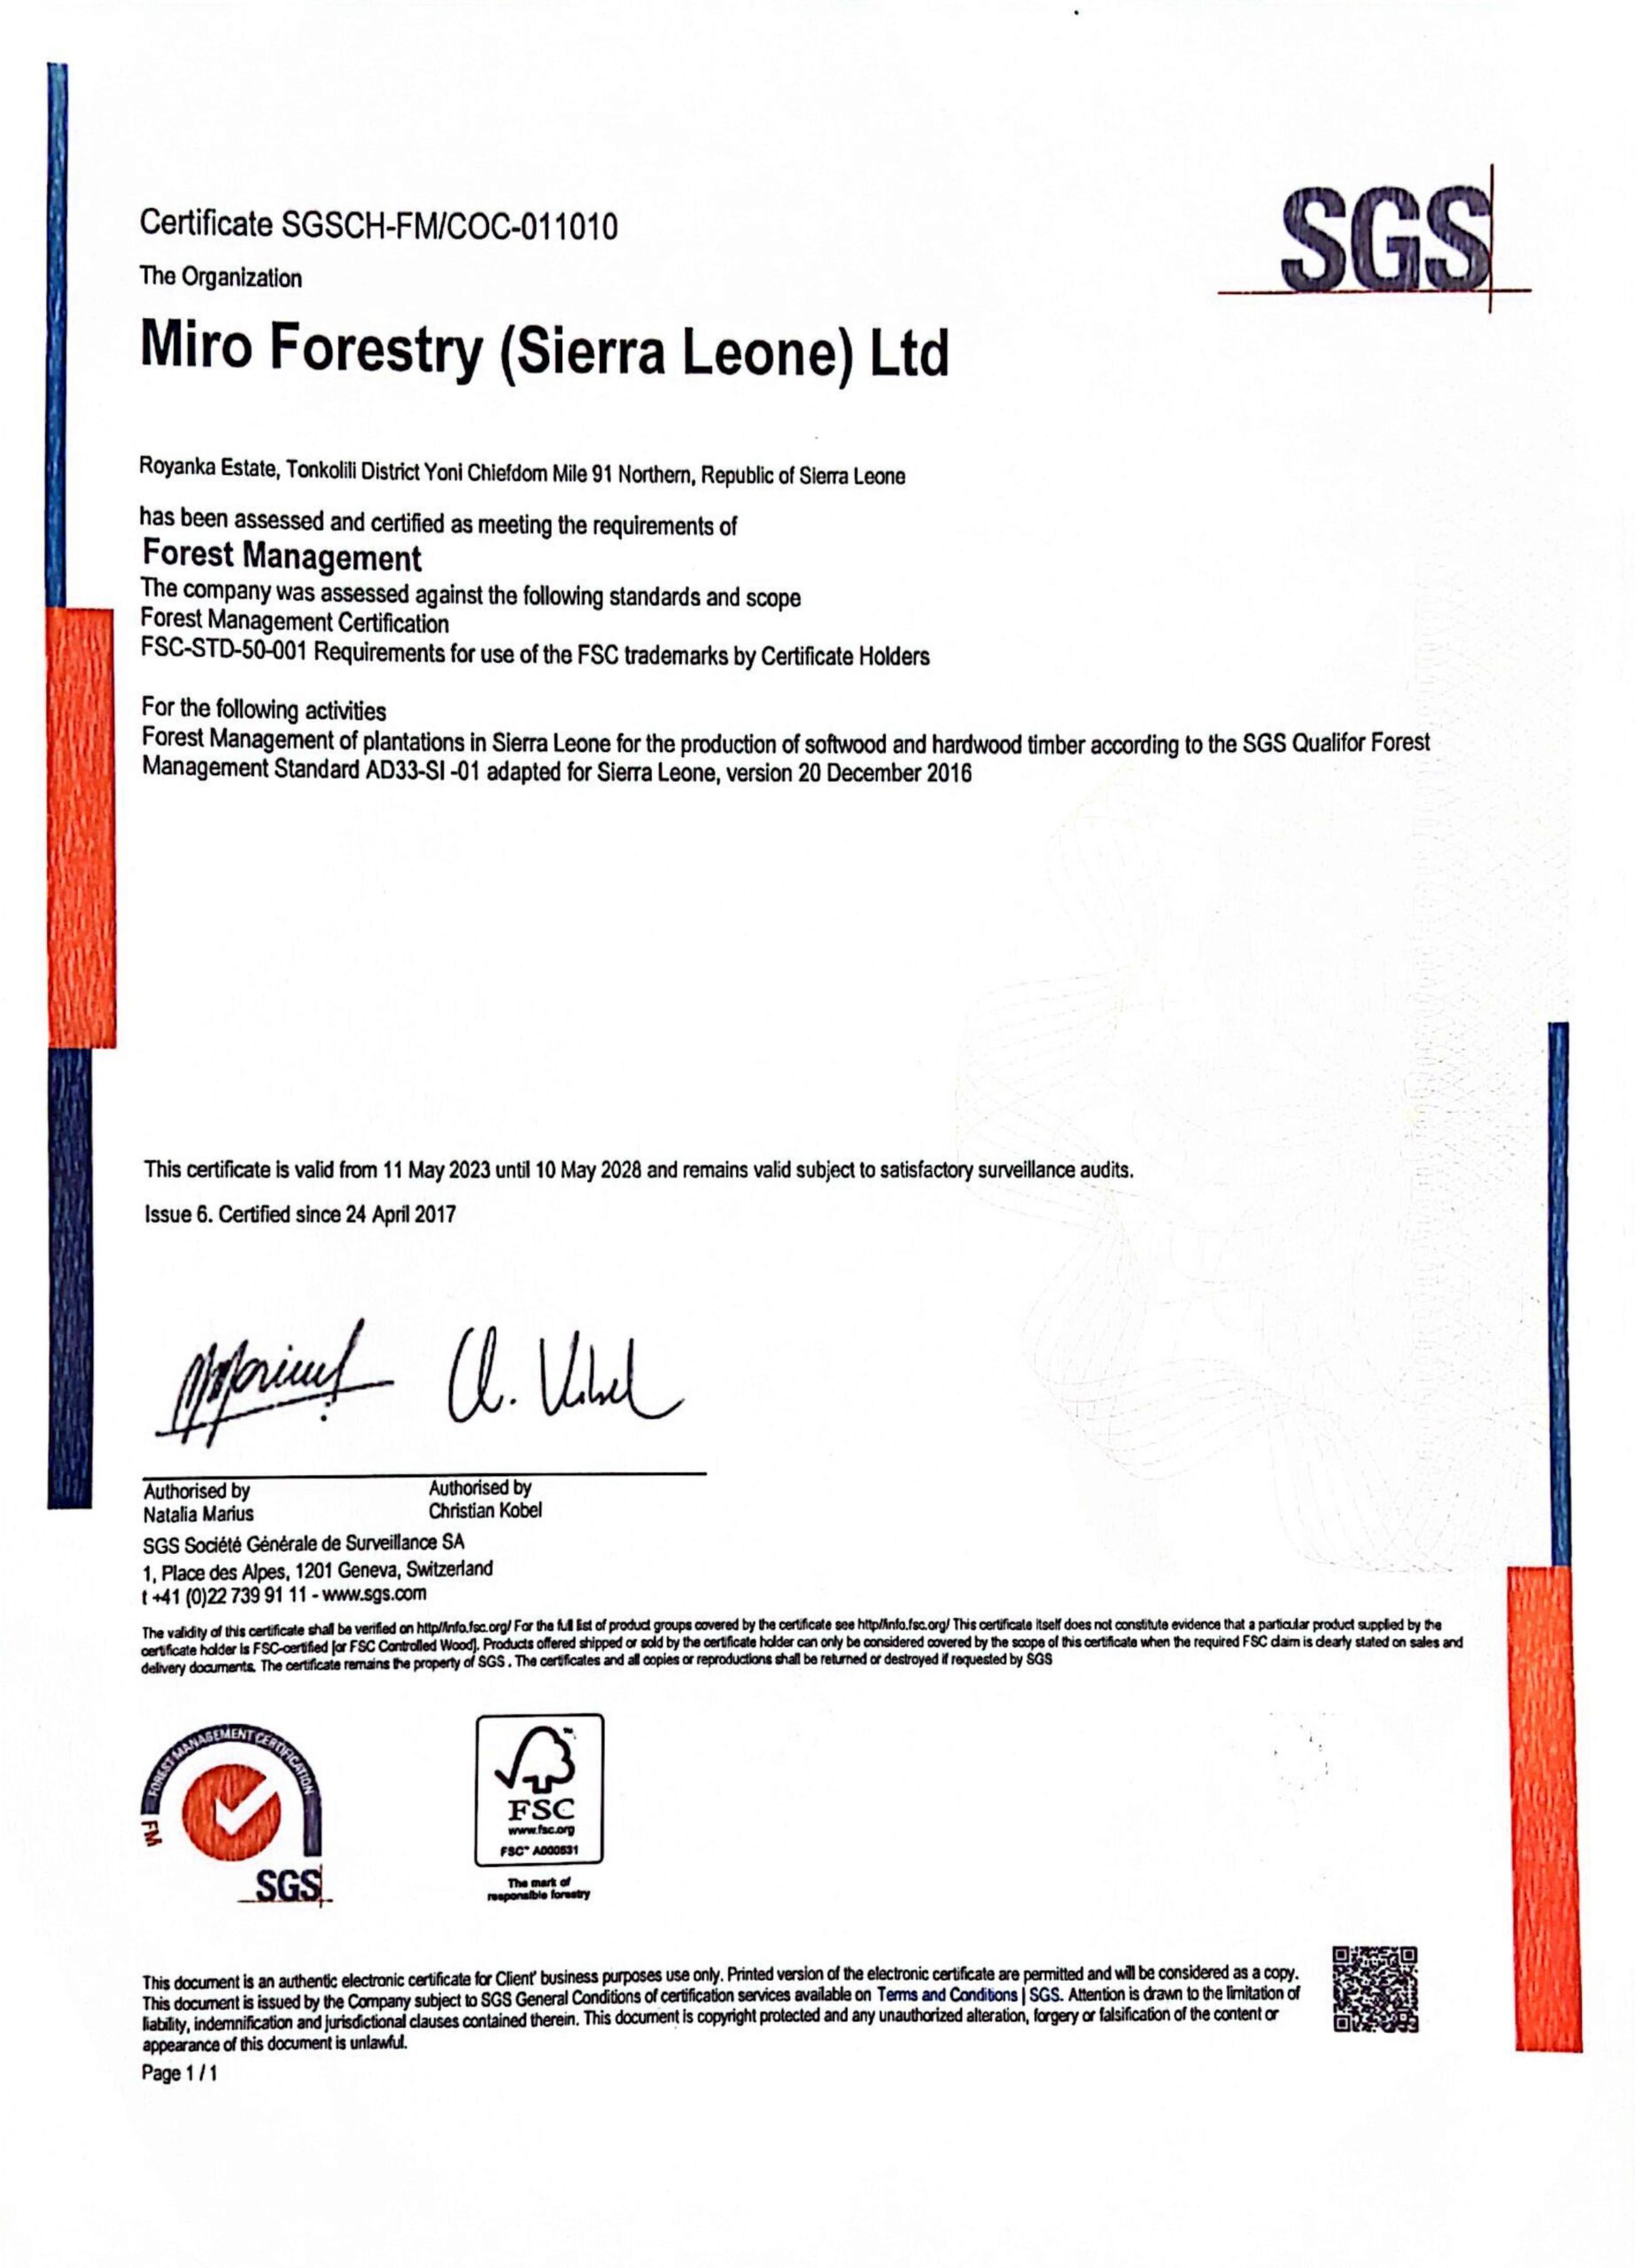 FSC Forest Management